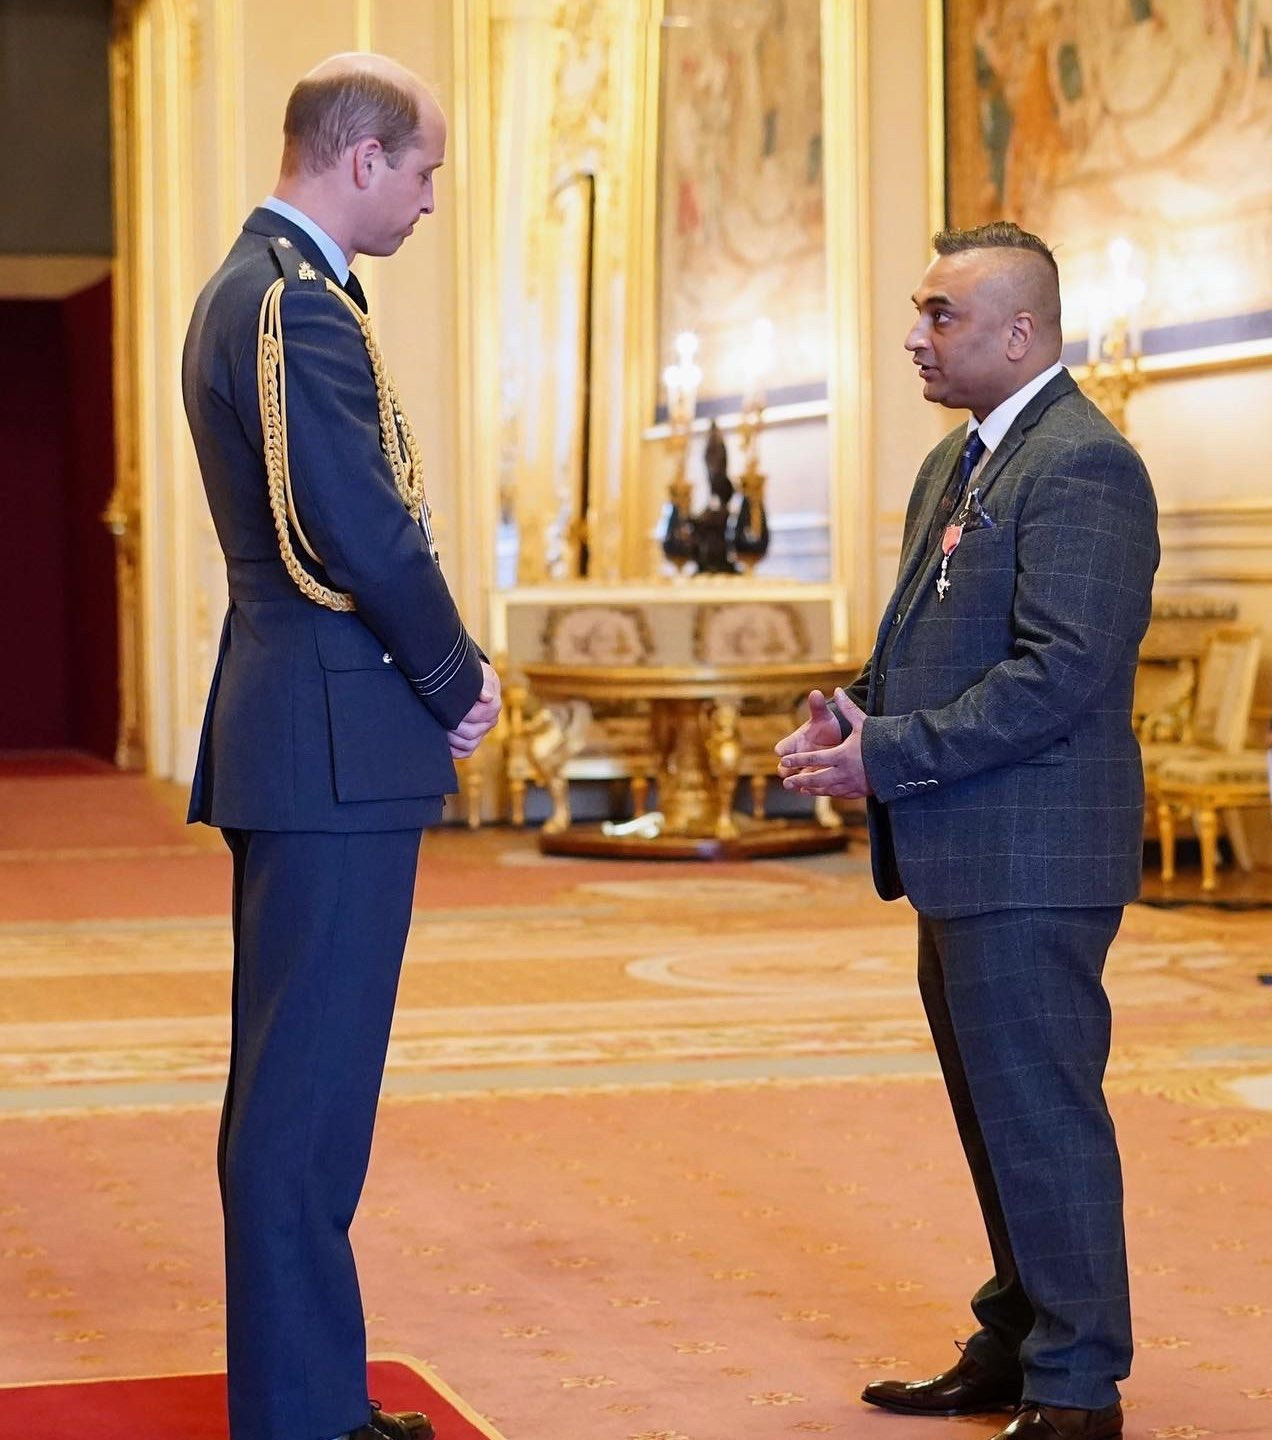 The Queen honoring Mr Sanjeev Kumar at Buckingham Palace.